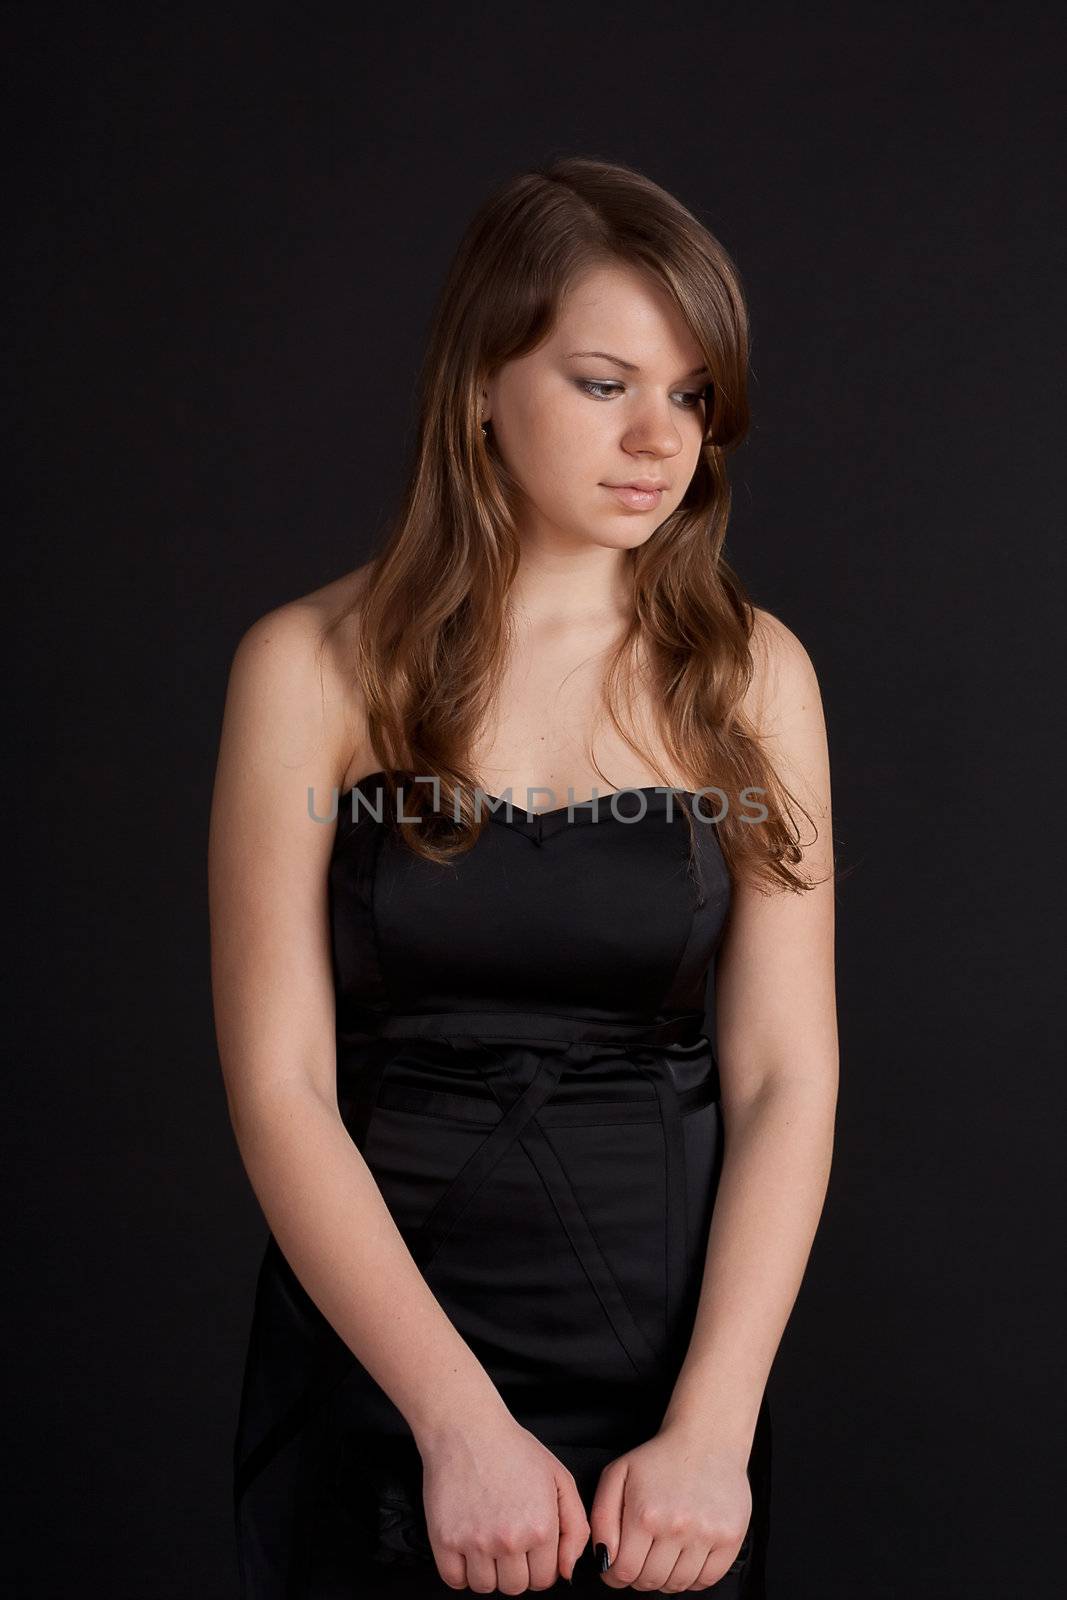 Beautiful girl in black dress by victosha